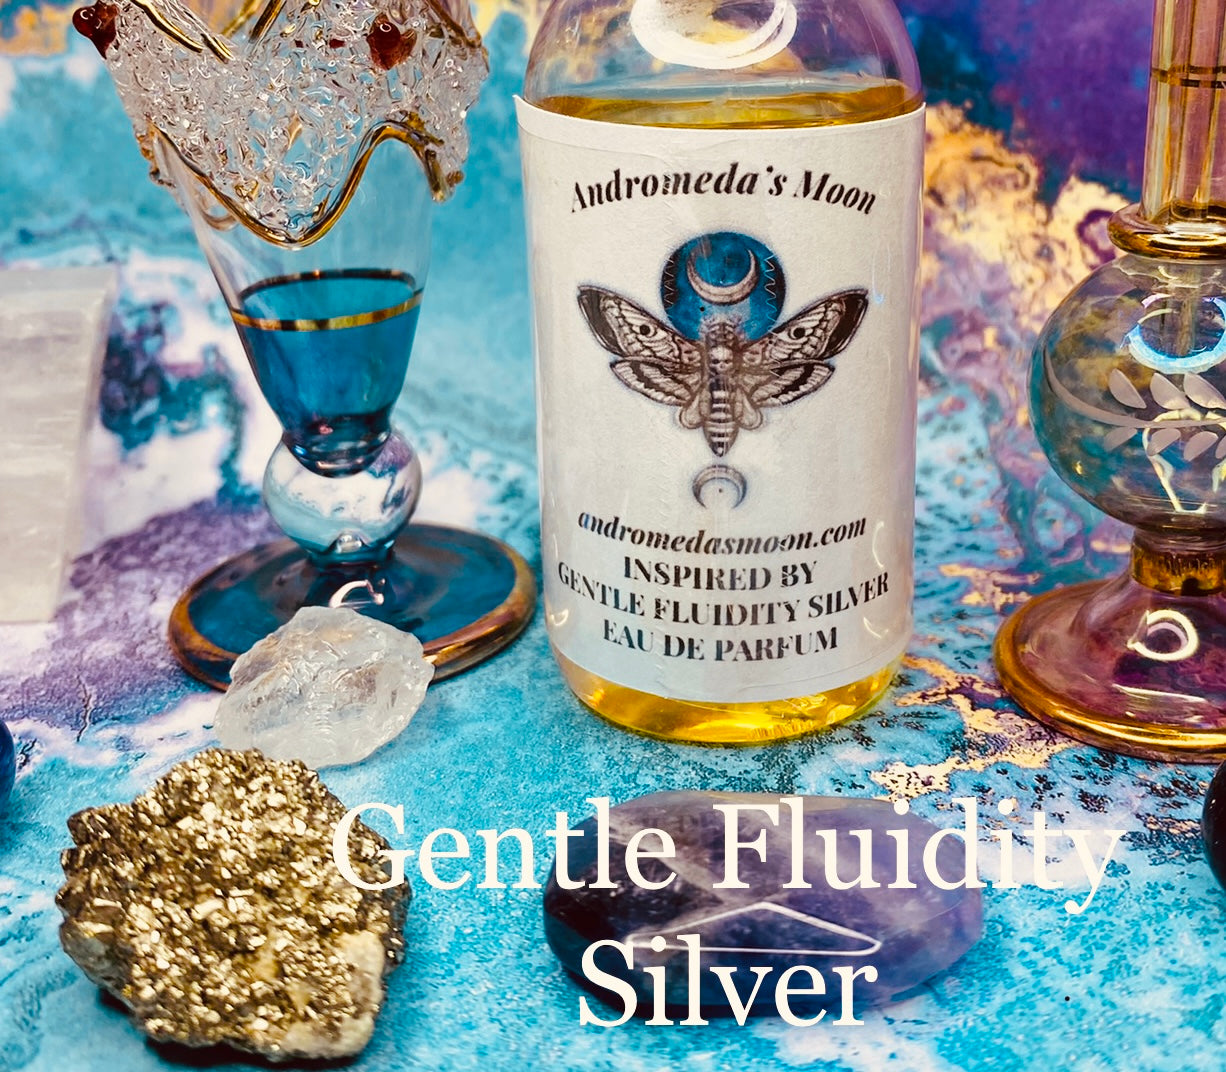 Inspired by Gentle Fluidity Silver Eau De Parfum